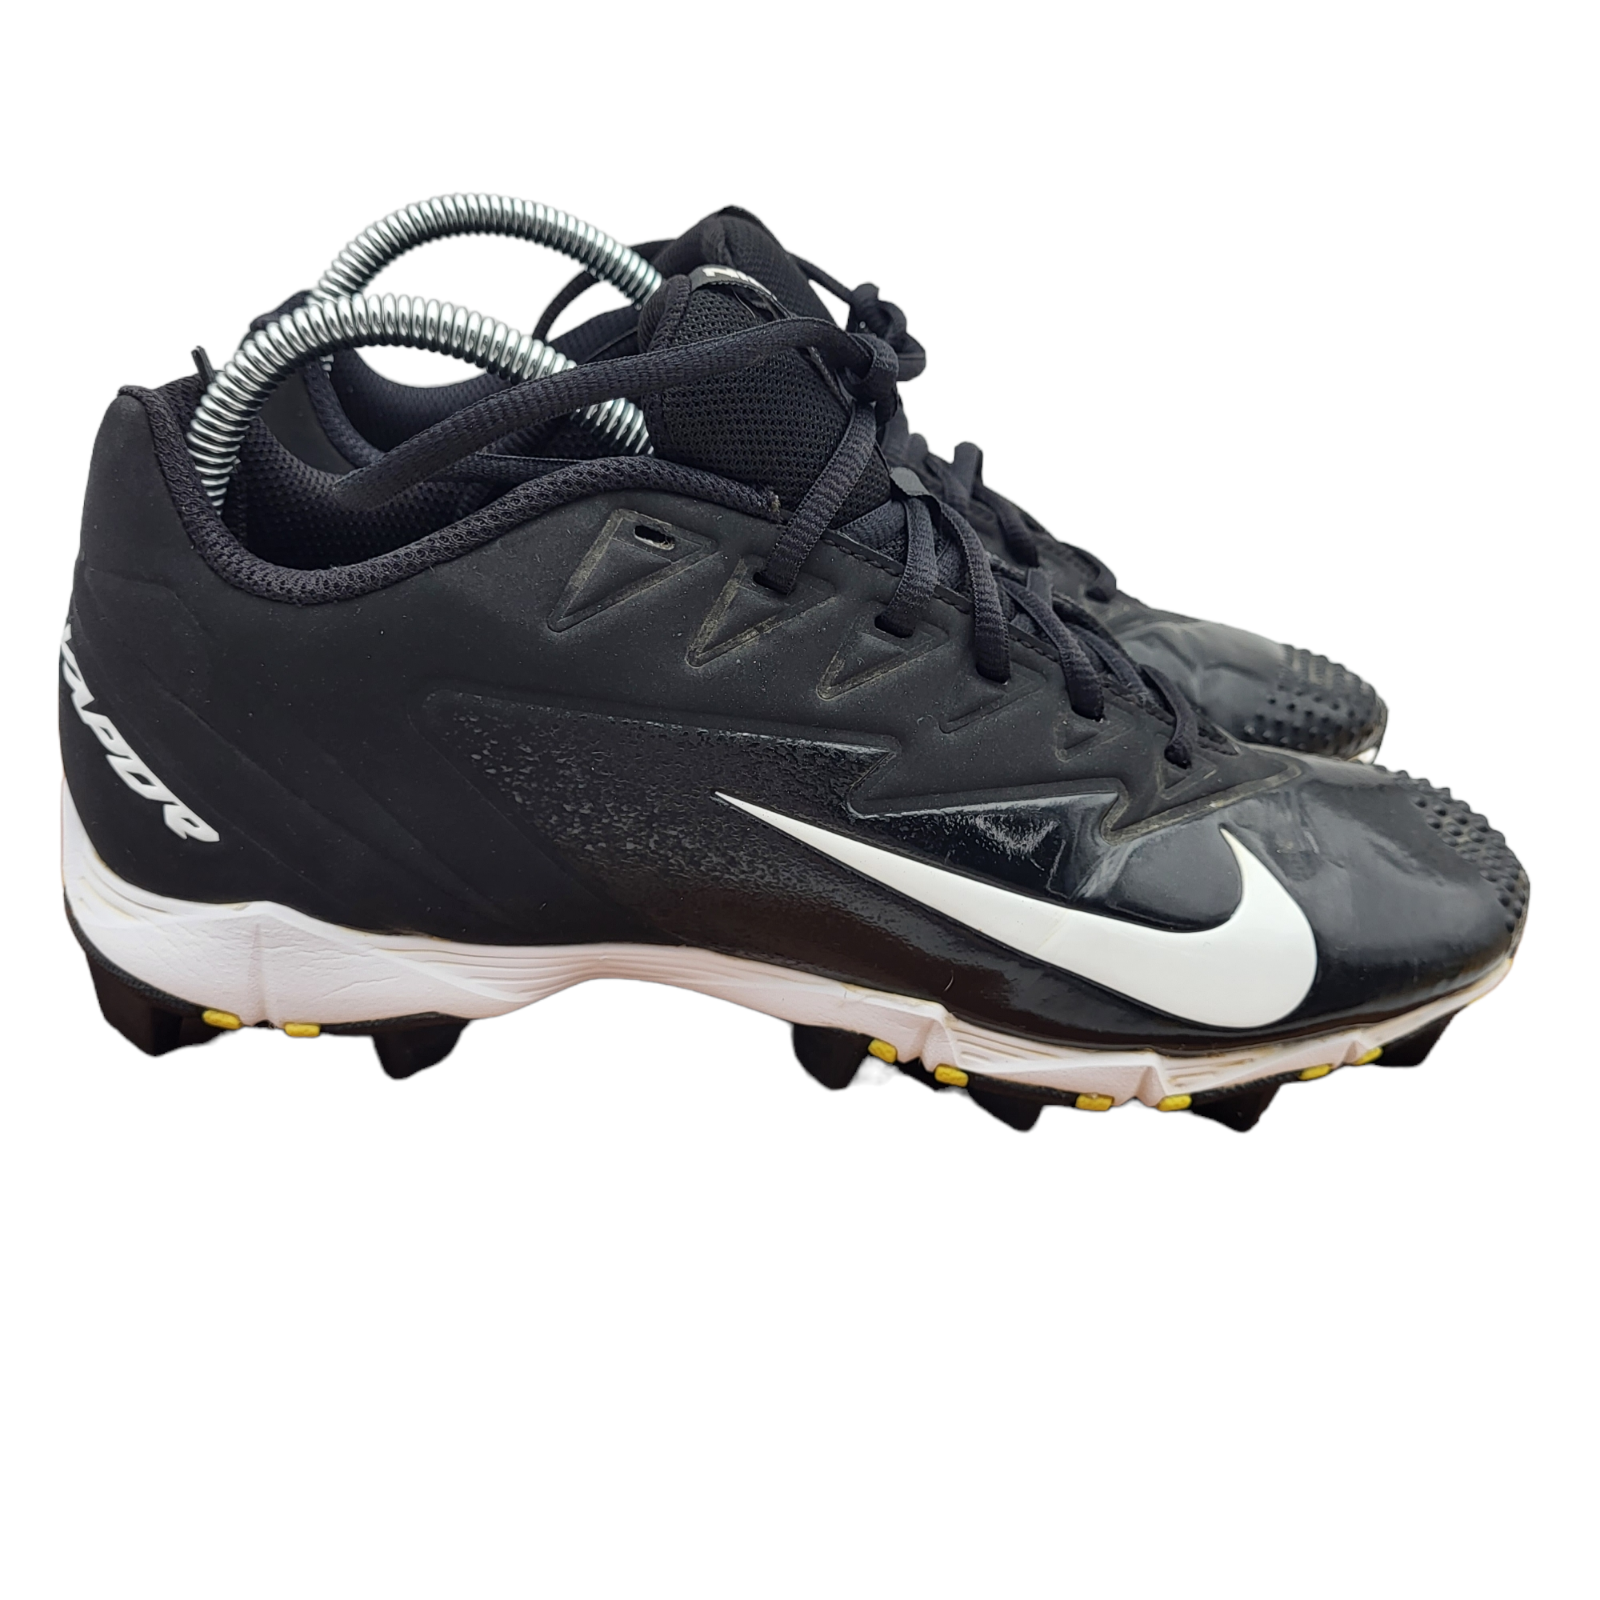 Nike Vapor Ultrafly Keystone Baseball Cleats Mens 9 852688-010 Black White